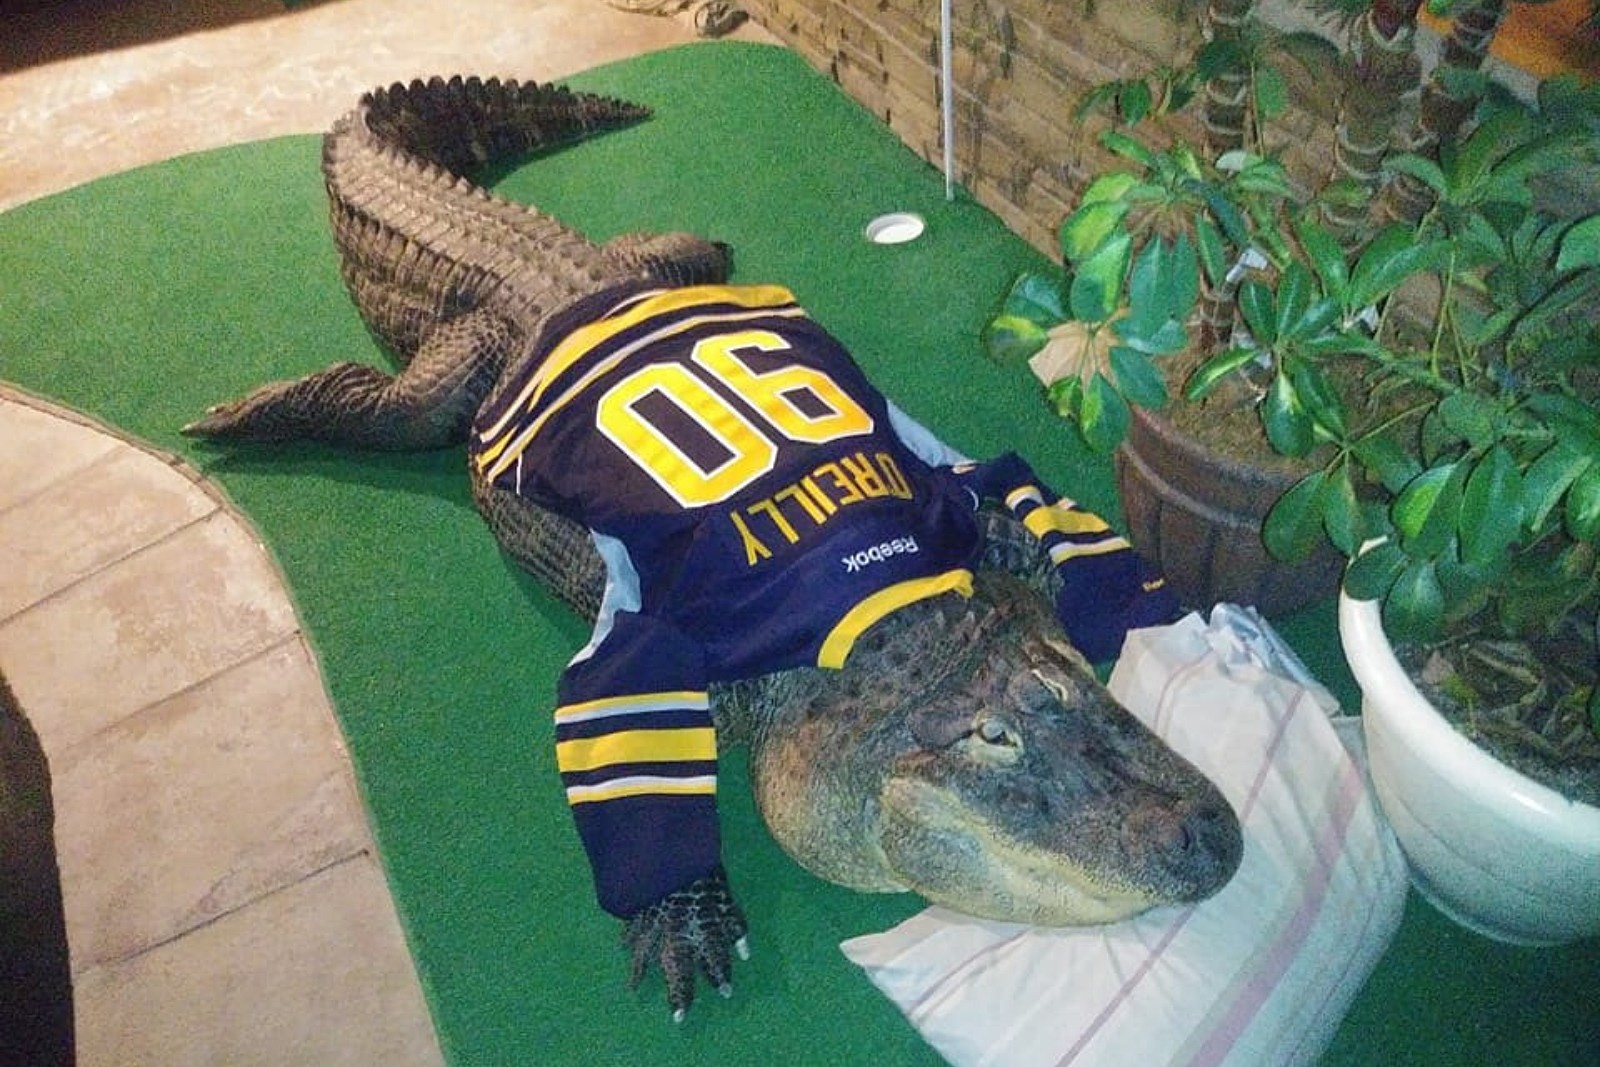 Massive Pet Alligator Taken From Western New York Home